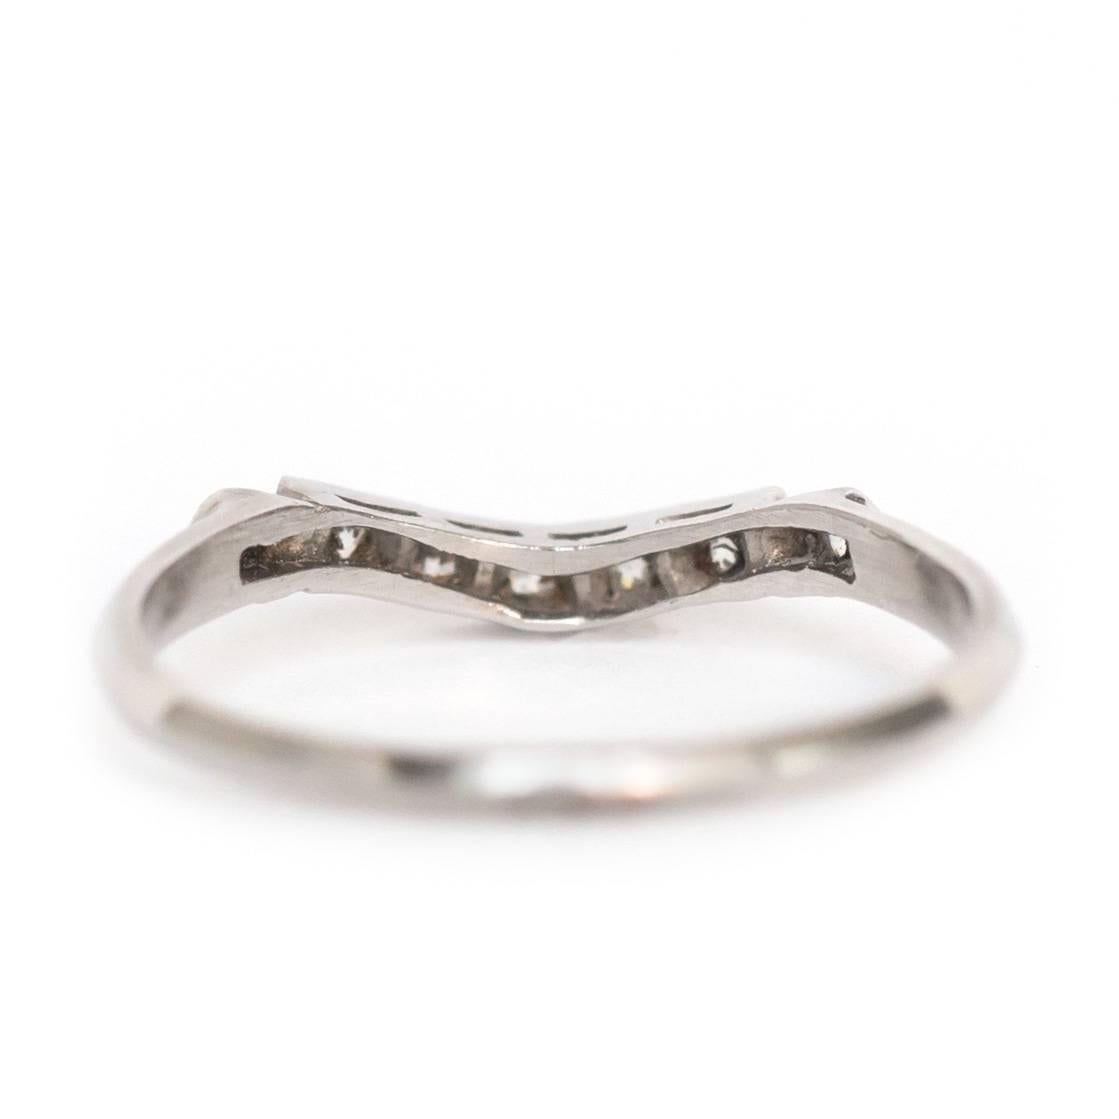 Women's 1910 Edwardian Antique Single Cut Diamond Platinum Wedding Band Ring